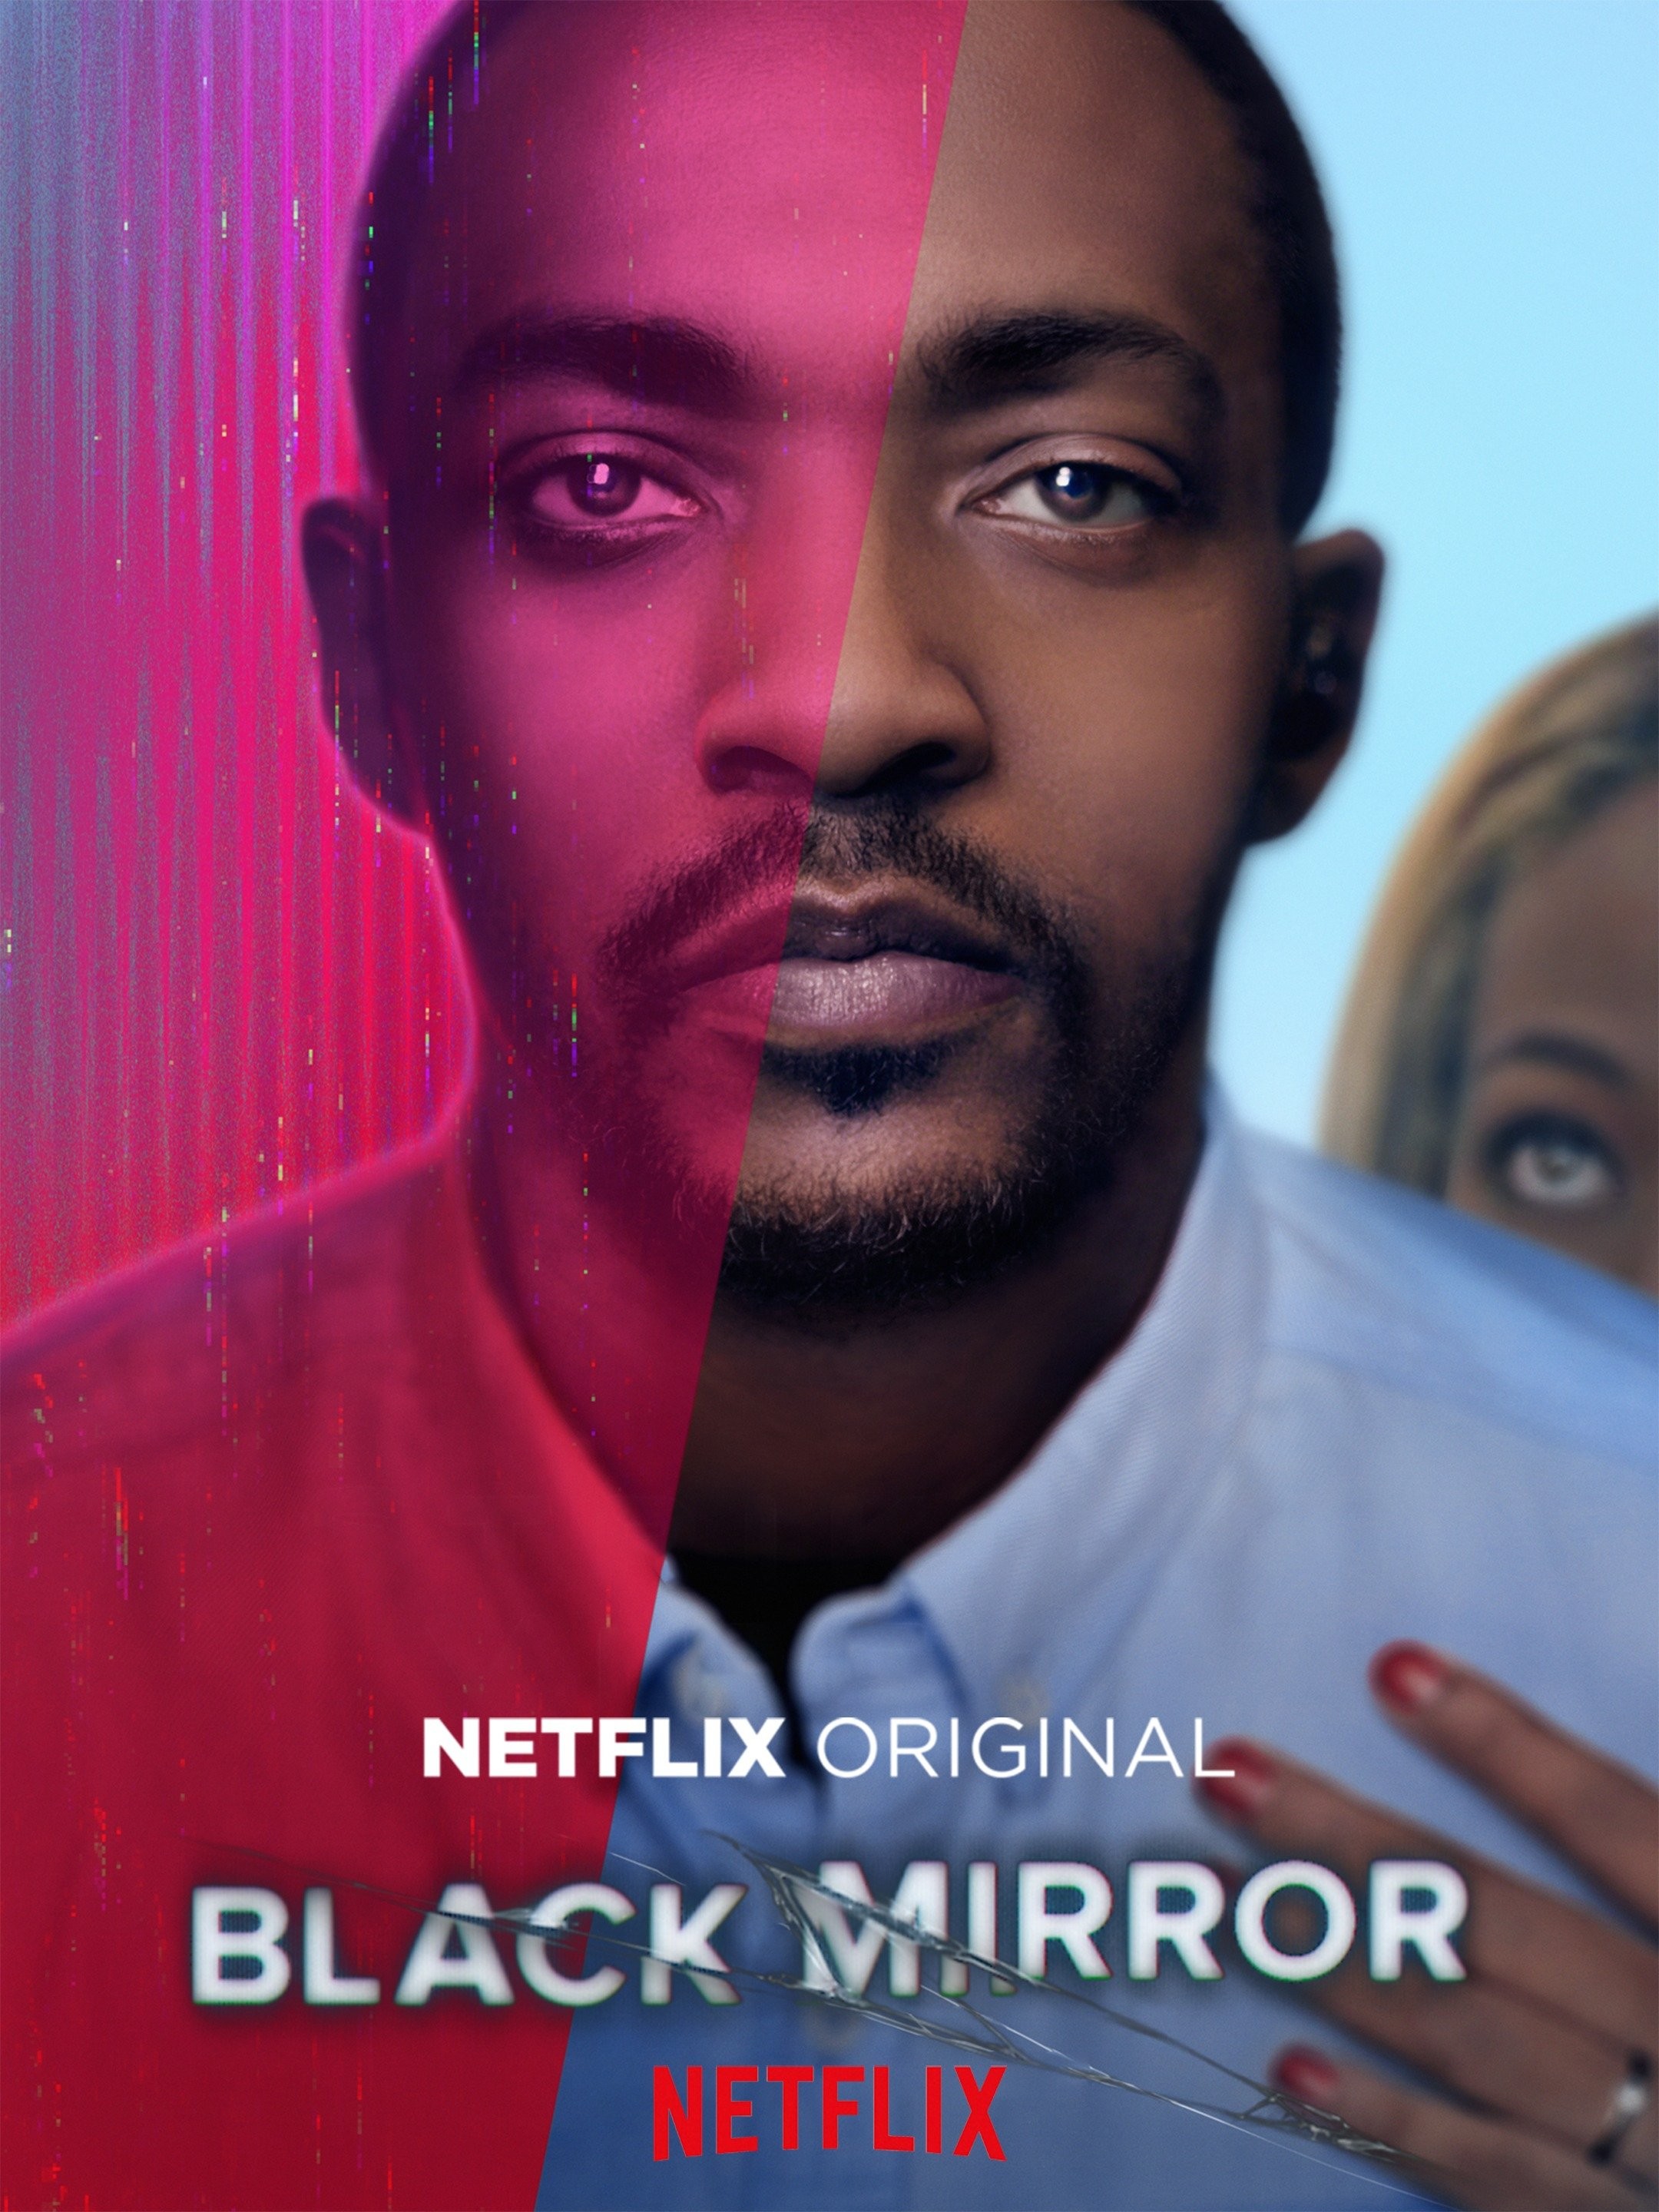 Netflix's new 'Black Mirror' movie takes interactive storytelling